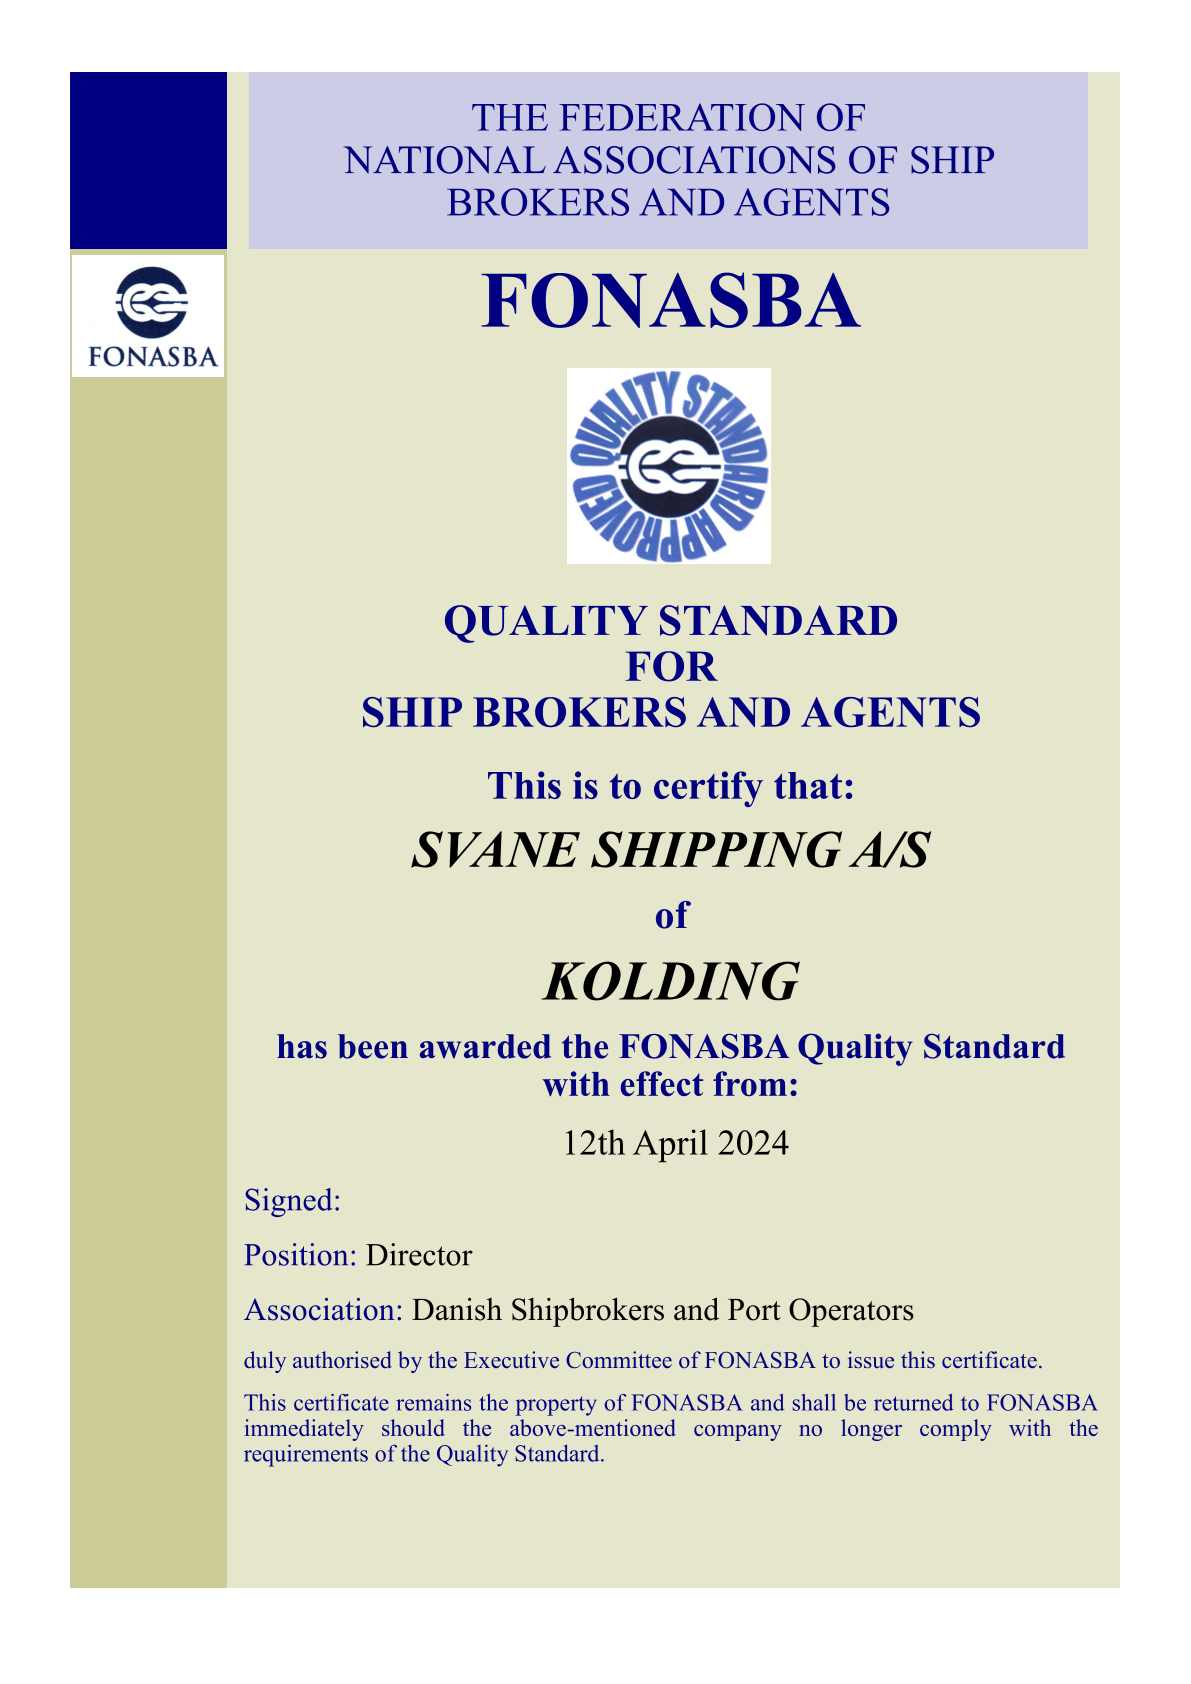 fonasba quality certificate 2024